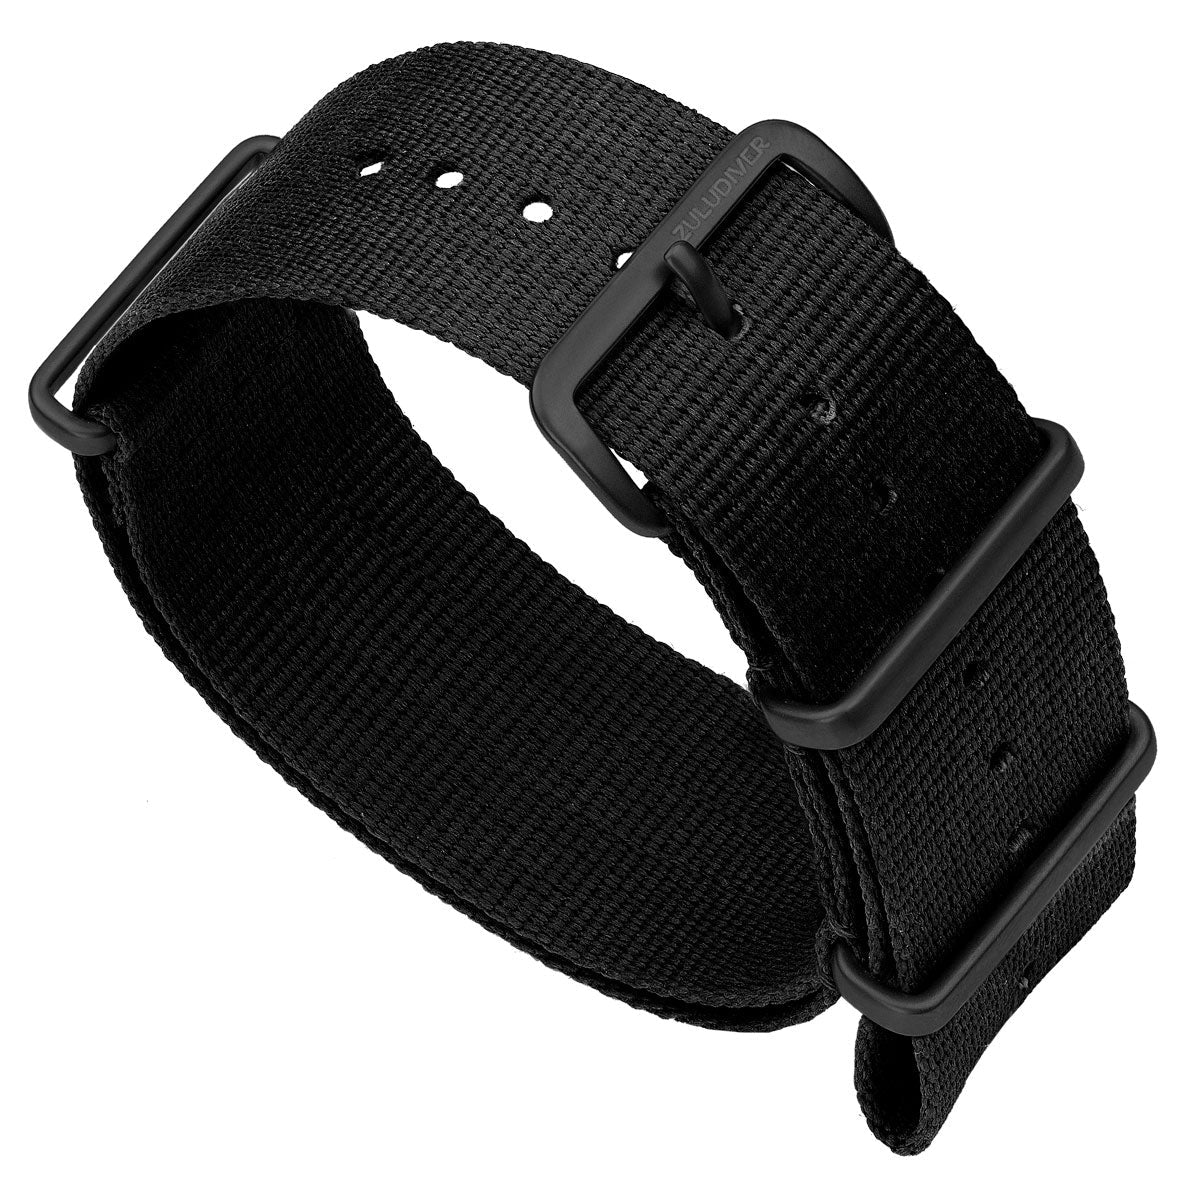 Military NATO nylon watch strap, colour black, with IP black finish hardware